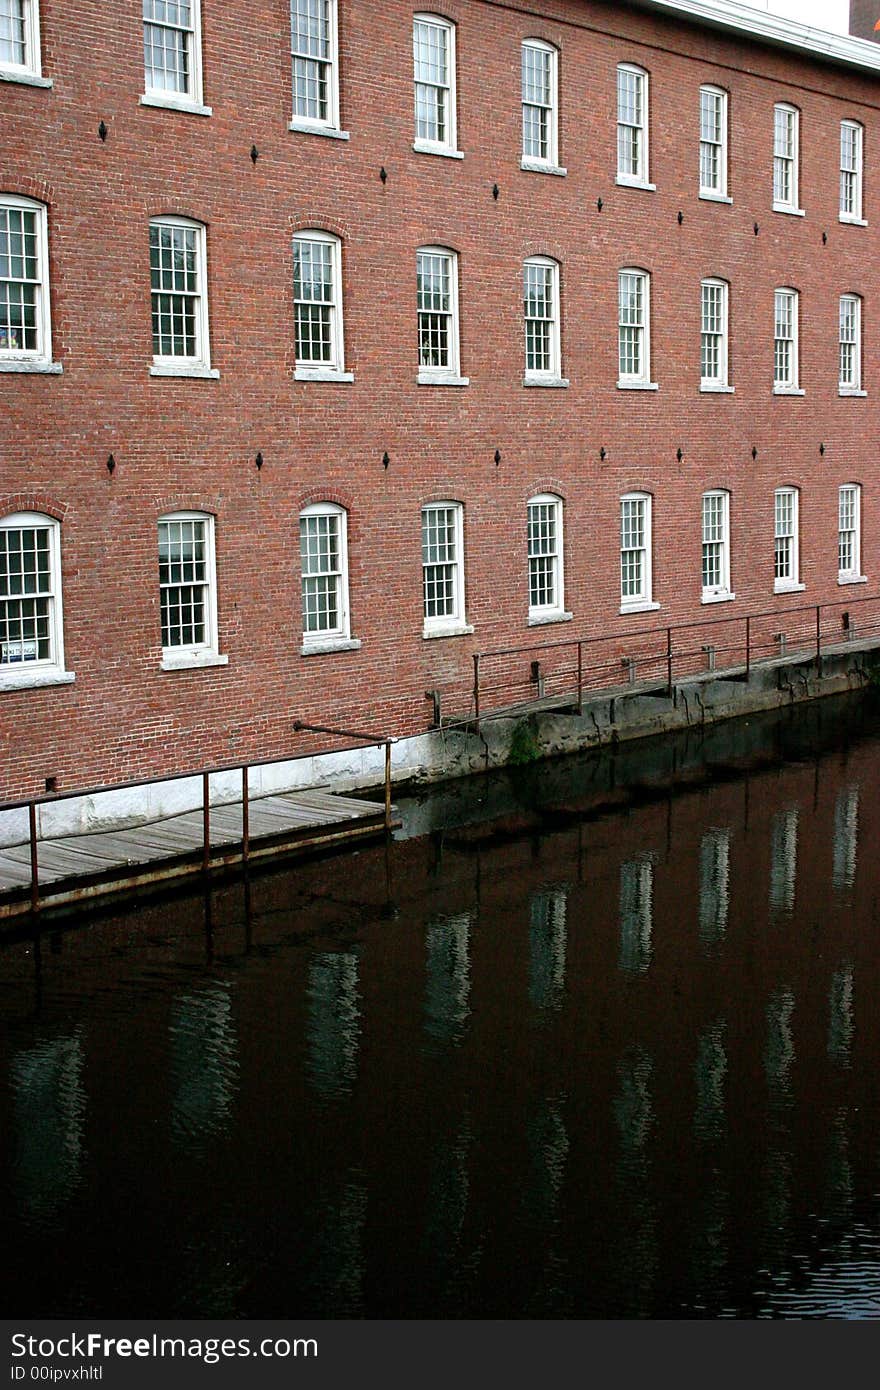 A river runs by historic Lowell, Massachusetts textile mill building. A river runs by historic Lowell, Massachusetts textile mill building